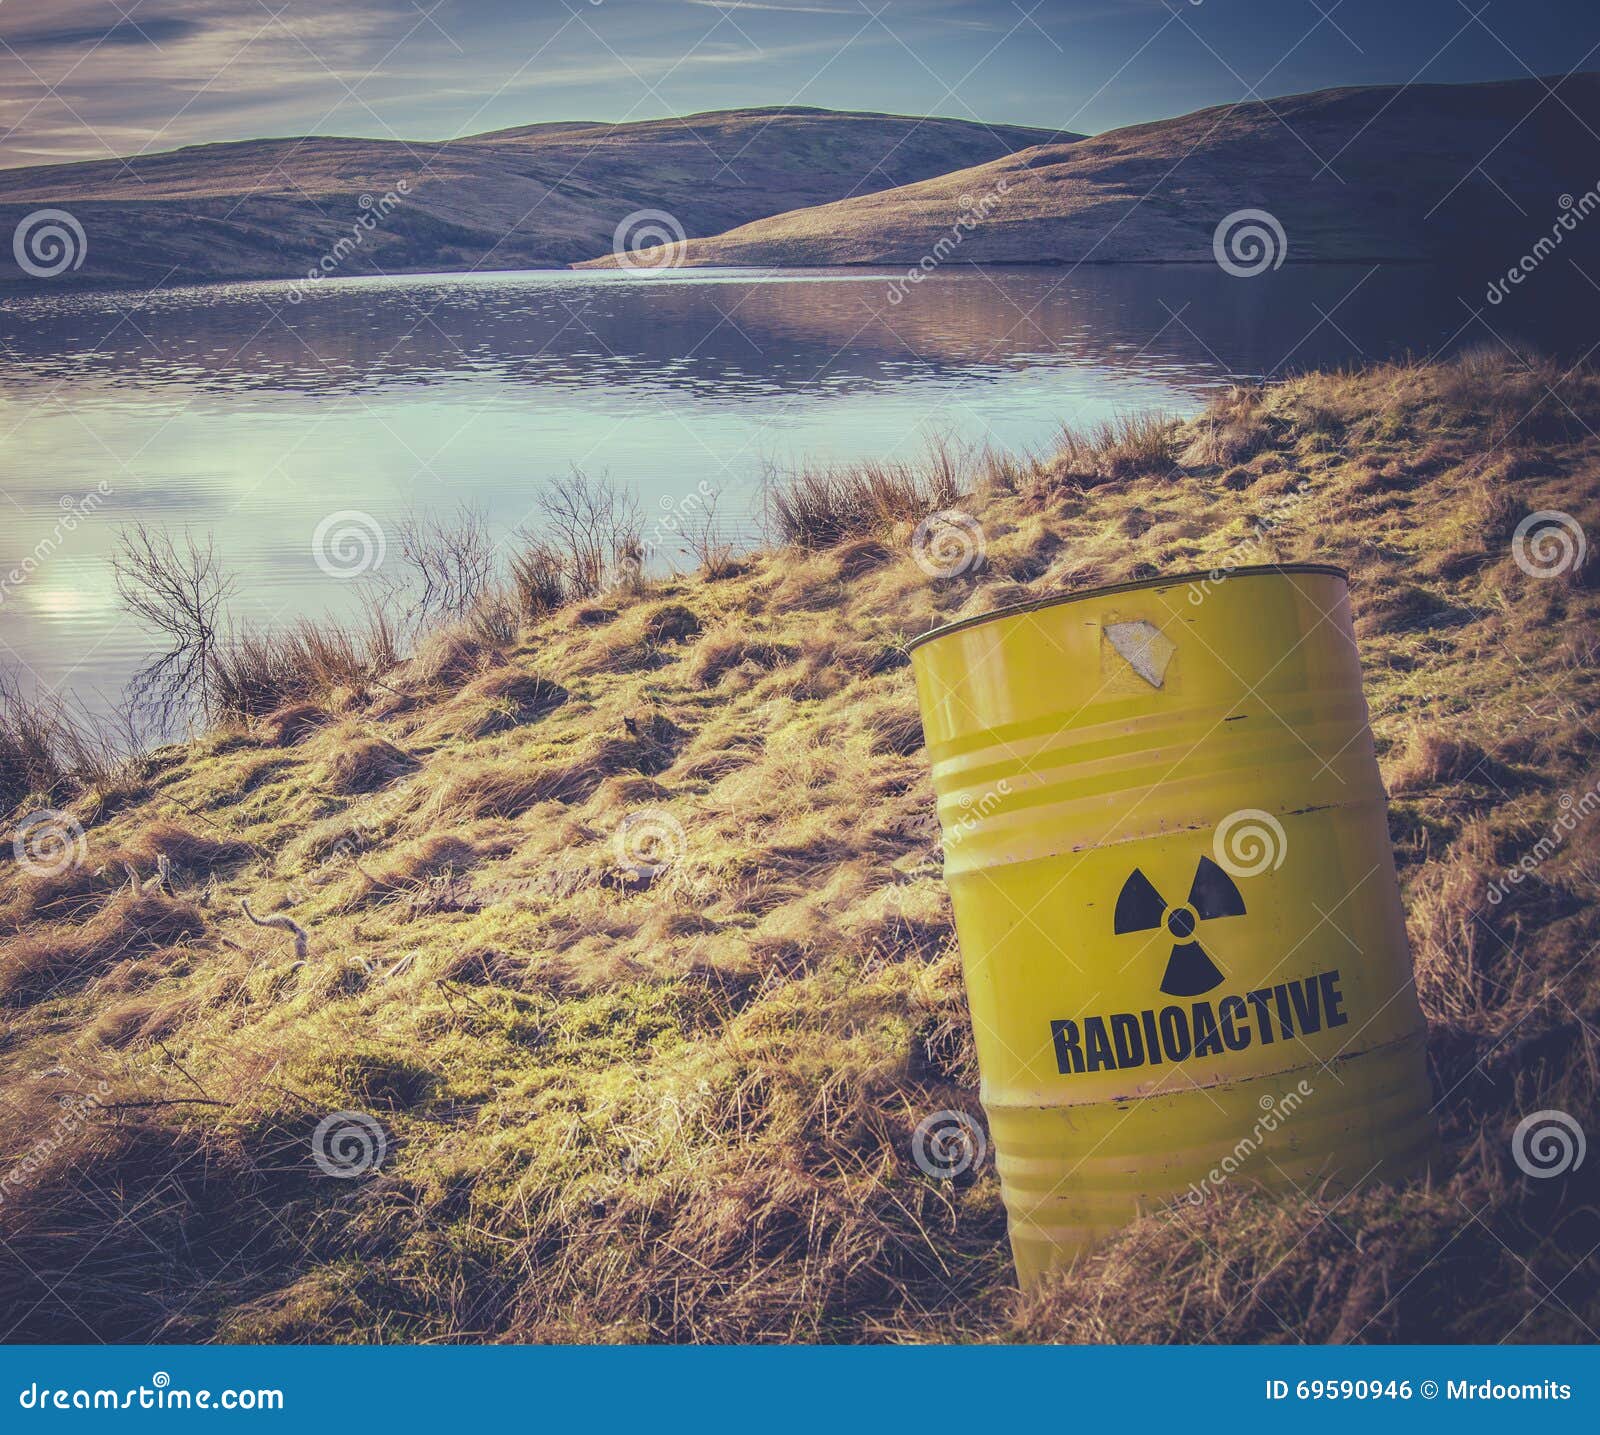 radioactive waste near water